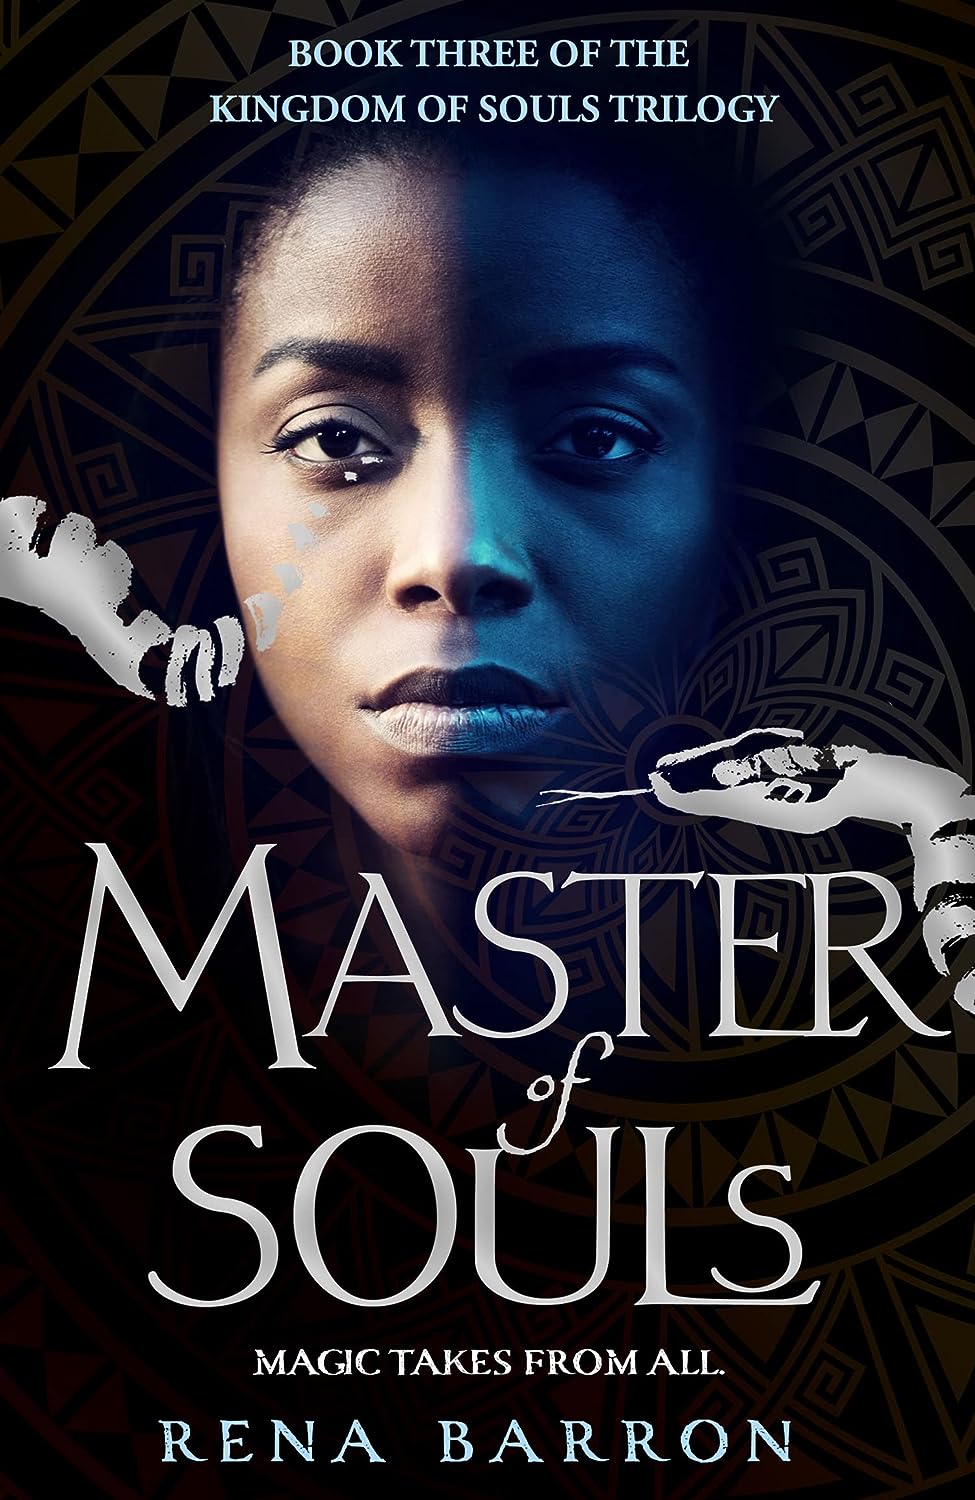 Save 38% on Master of Souls: Book 3 (Kingdom of Souls Trilogy) - Limited-Time Offer!